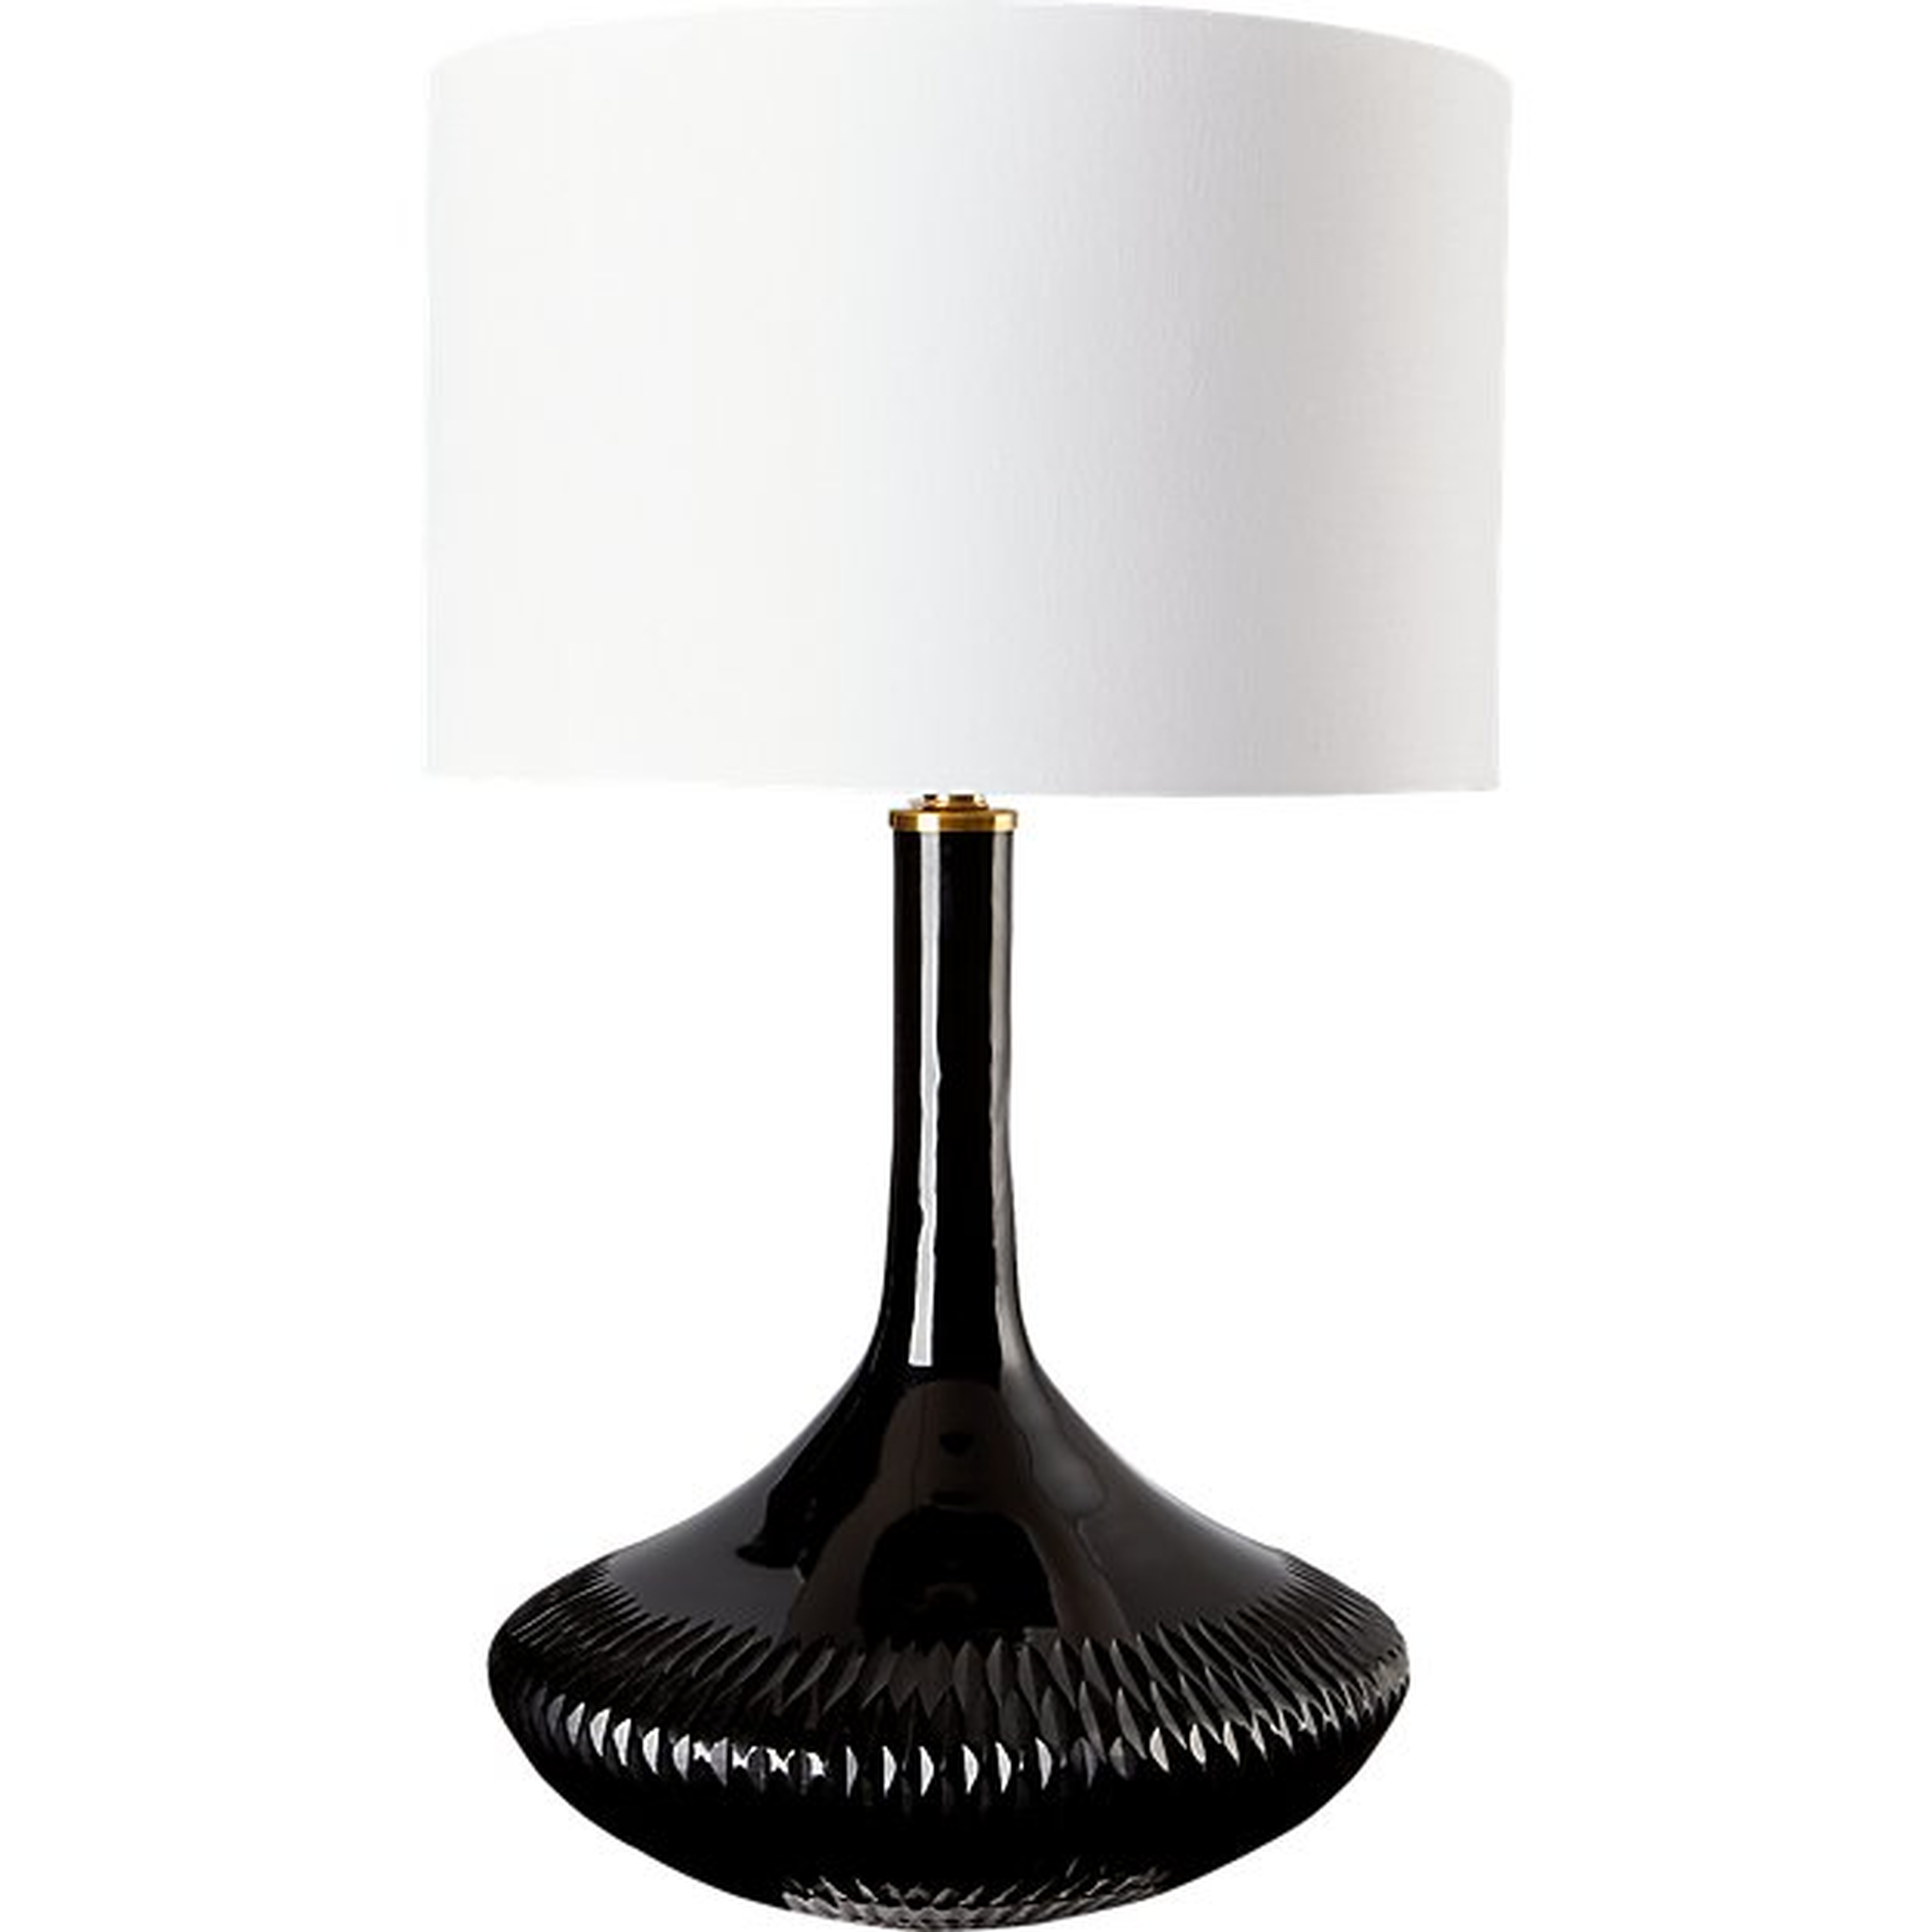 LUXOR BLACK GLASS TABLE LAMP - CB2